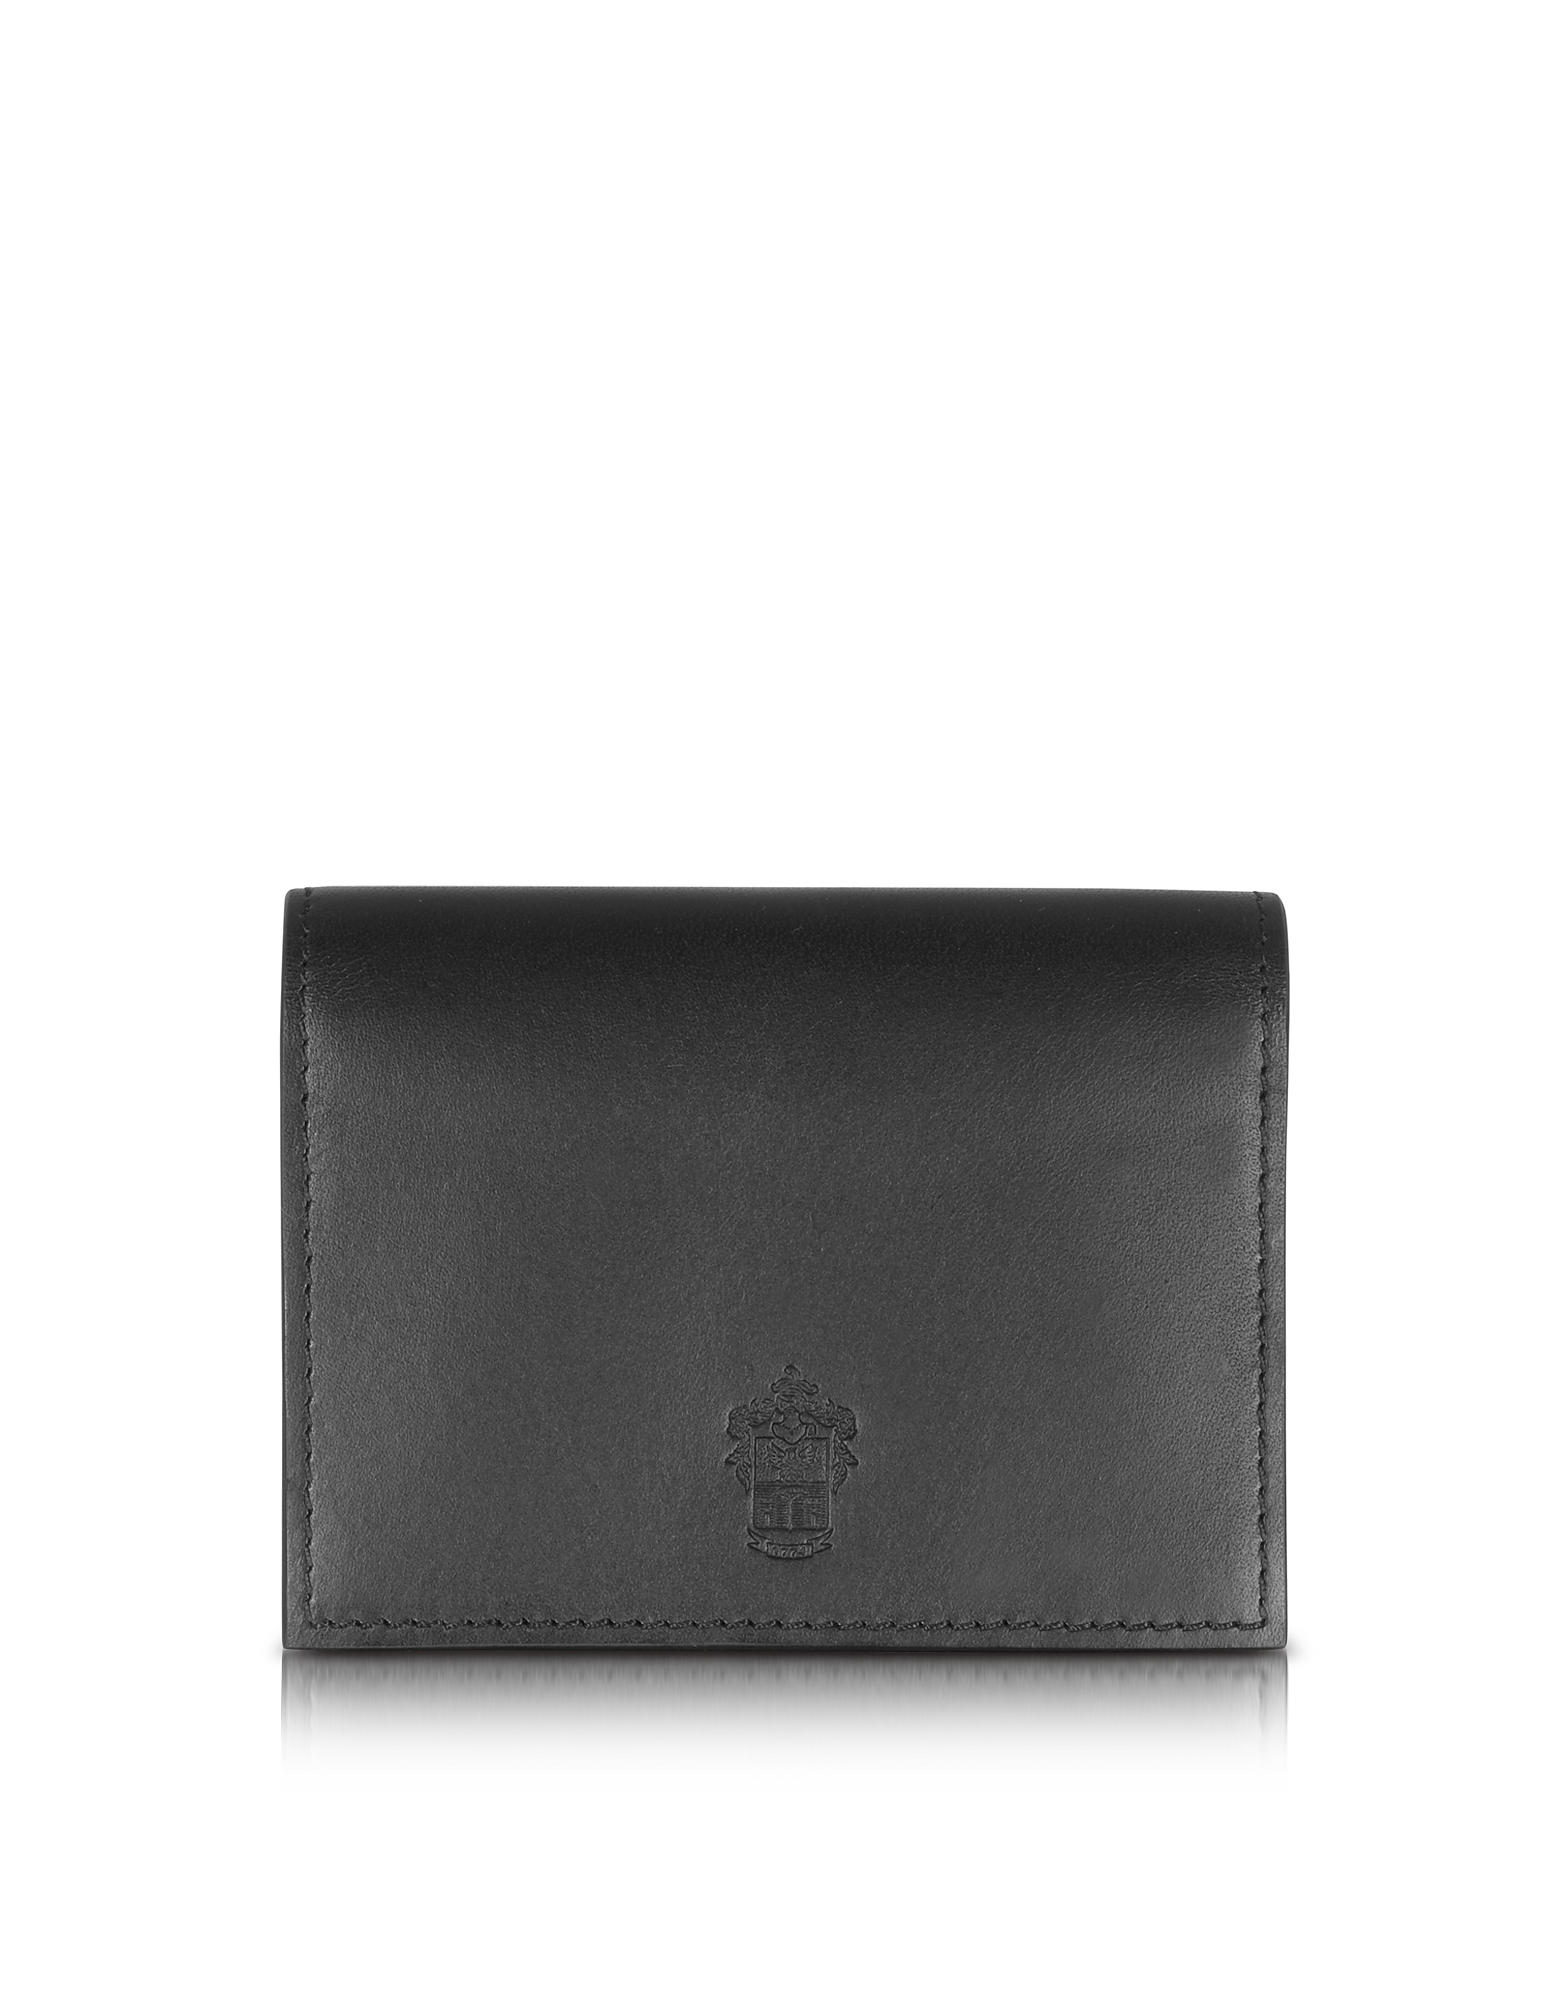 Pineider Power Elegance Double Black Leather Card Holder